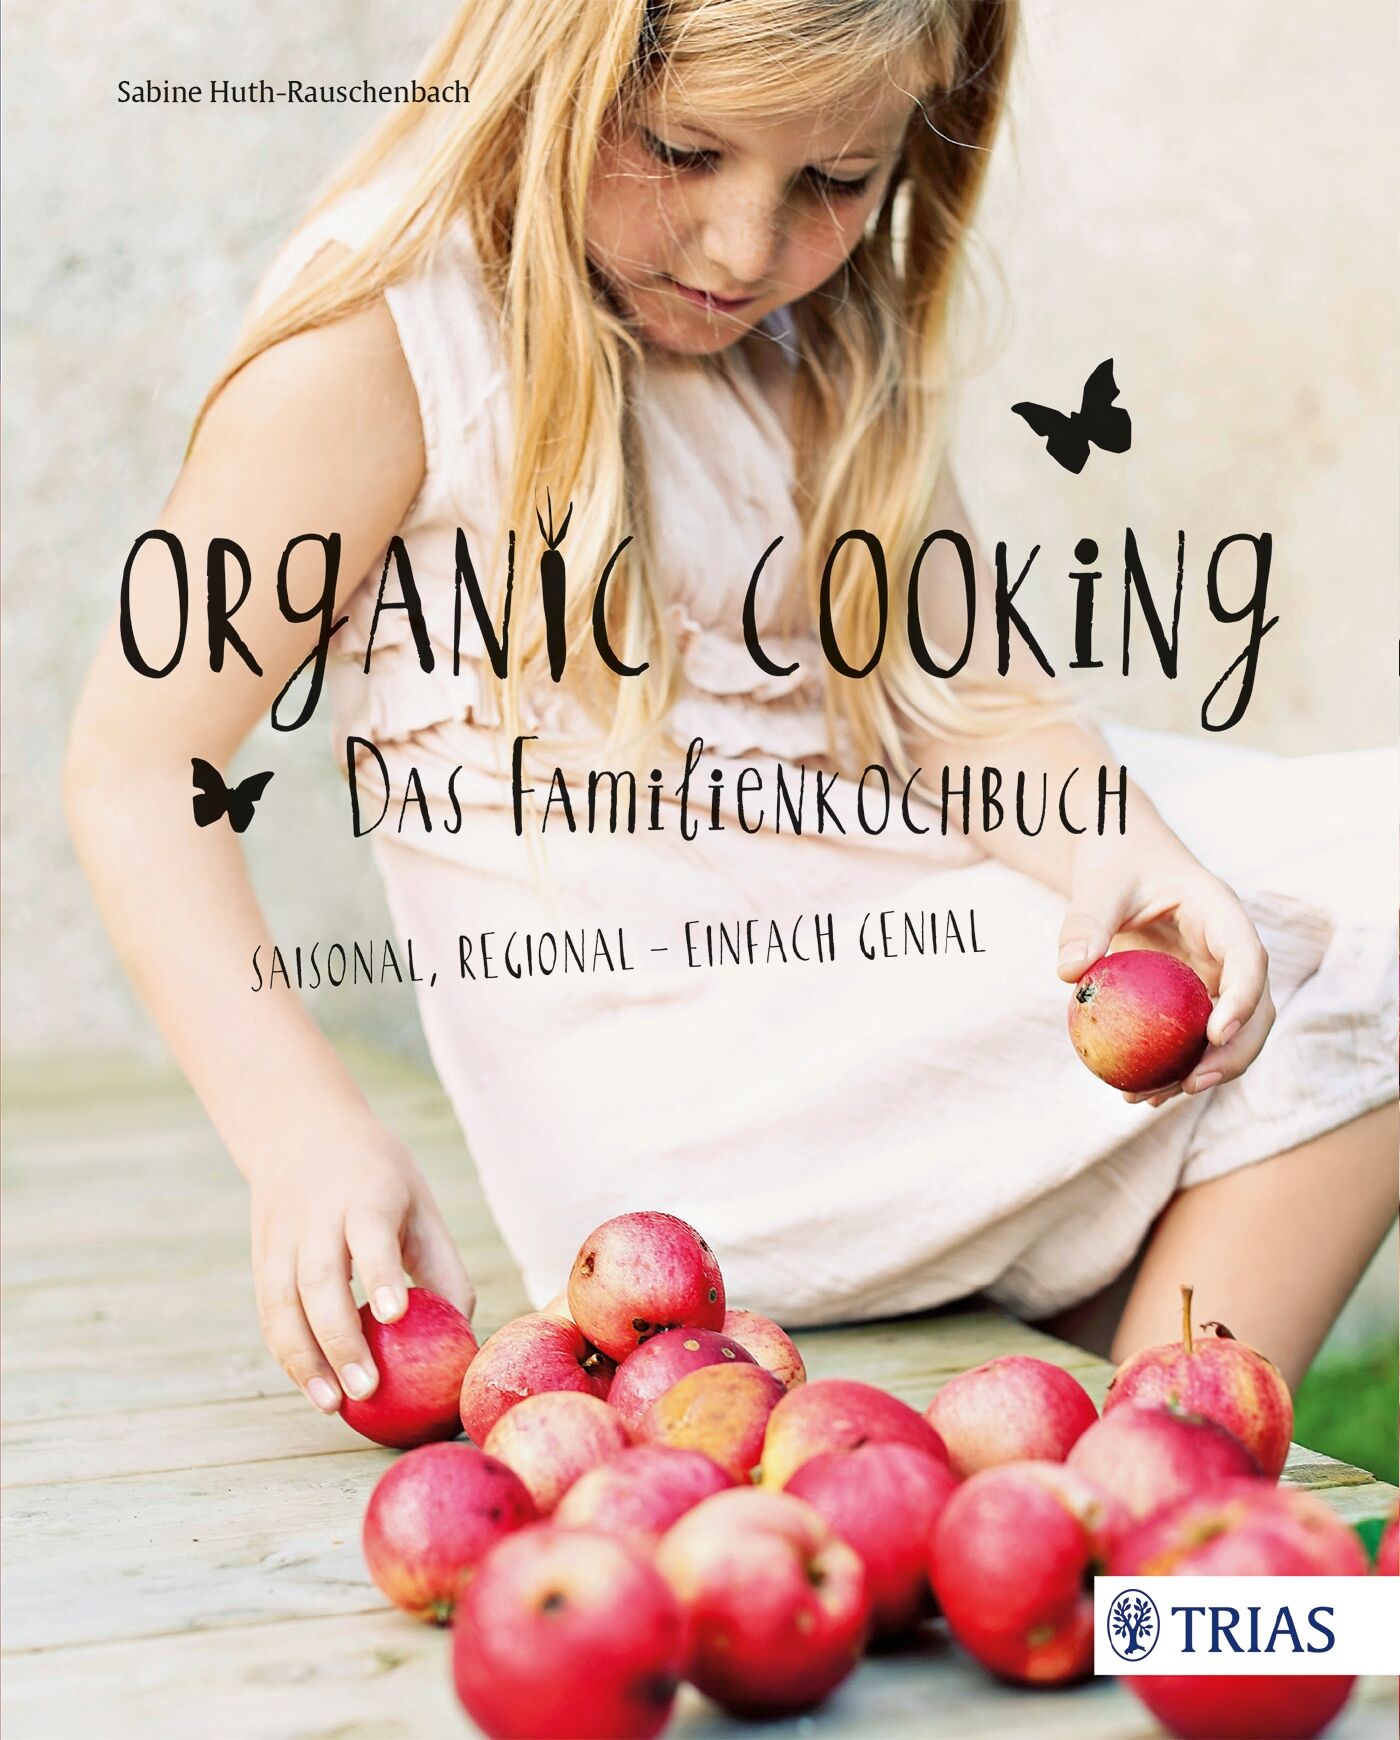 Organic Cooking - Das Familienkochbuch, 9783830480488